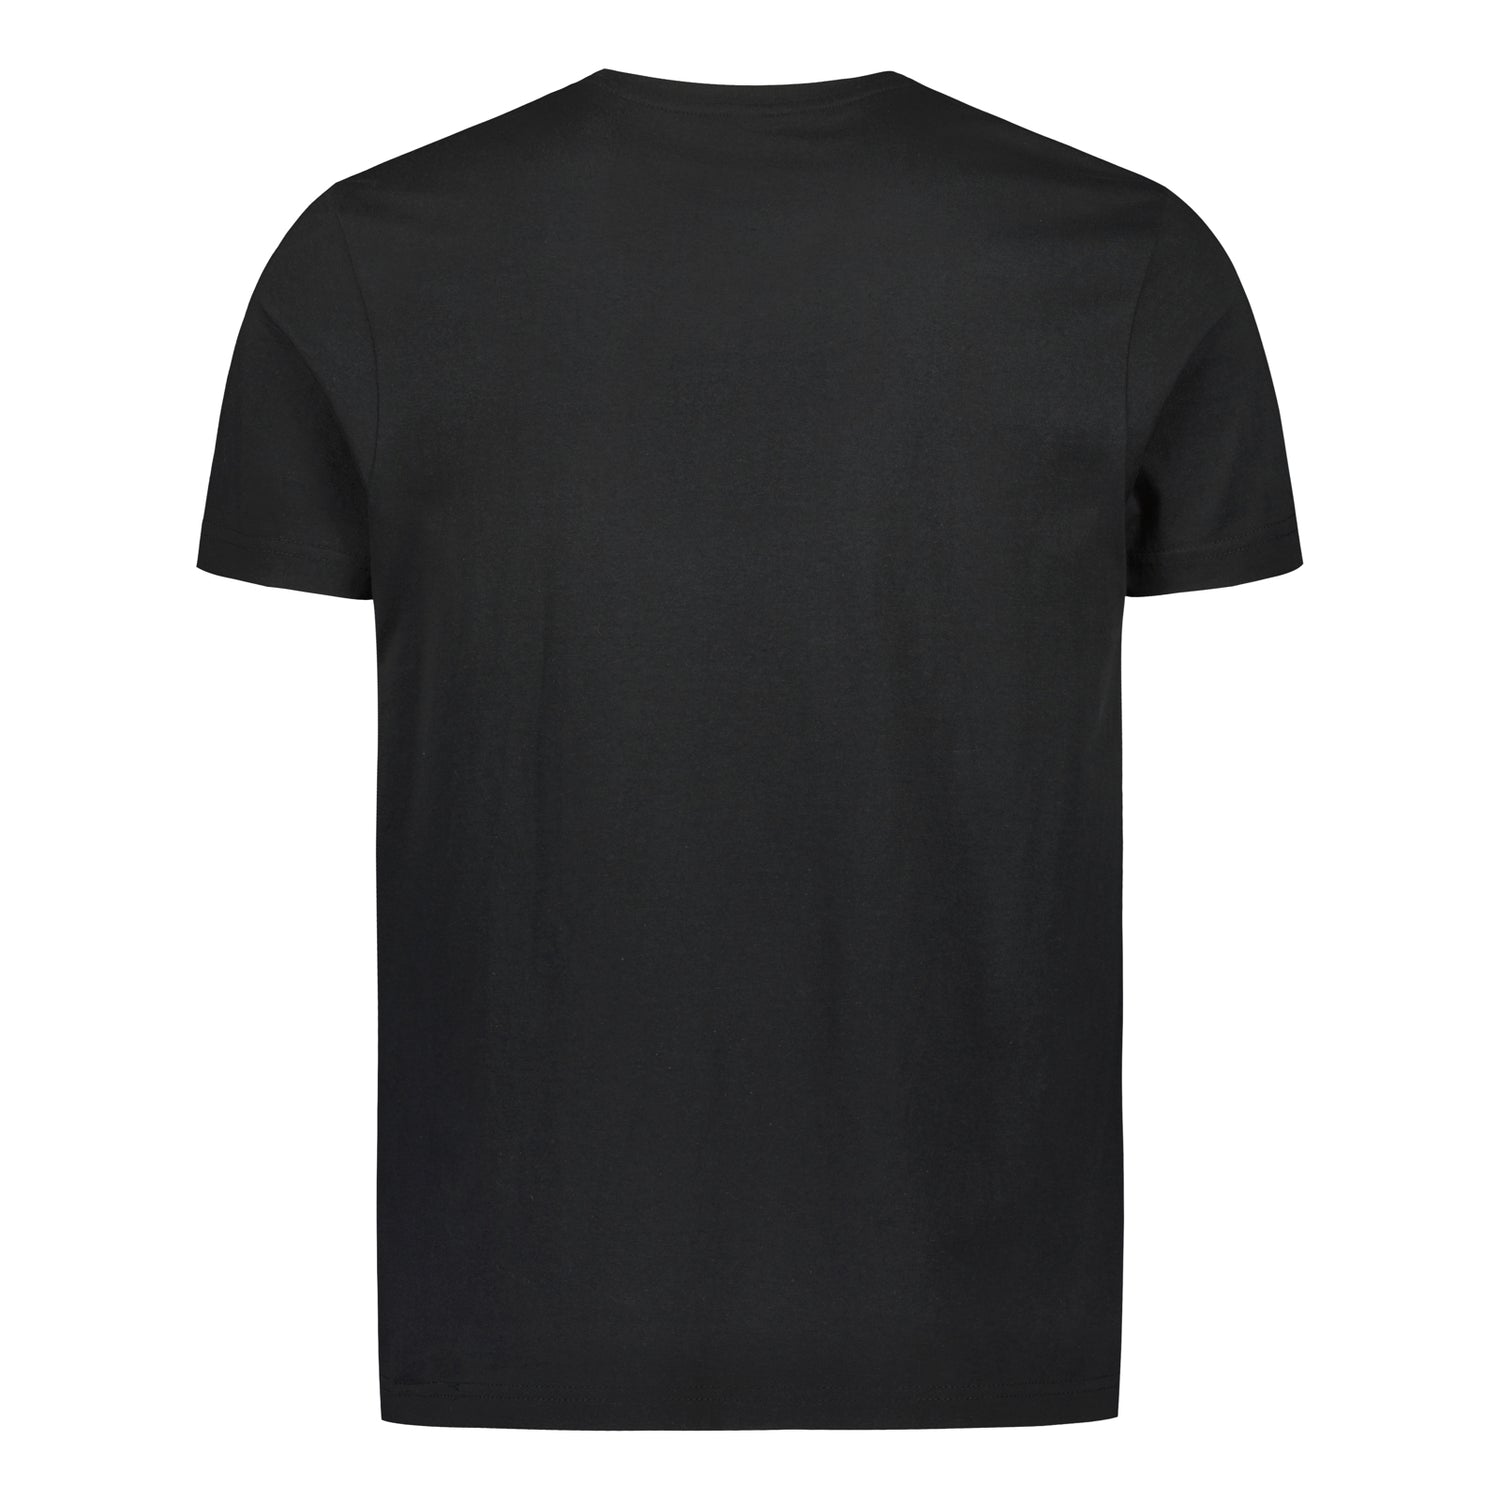 Huuhkajat 1911 Black Edition t-paita, Musta